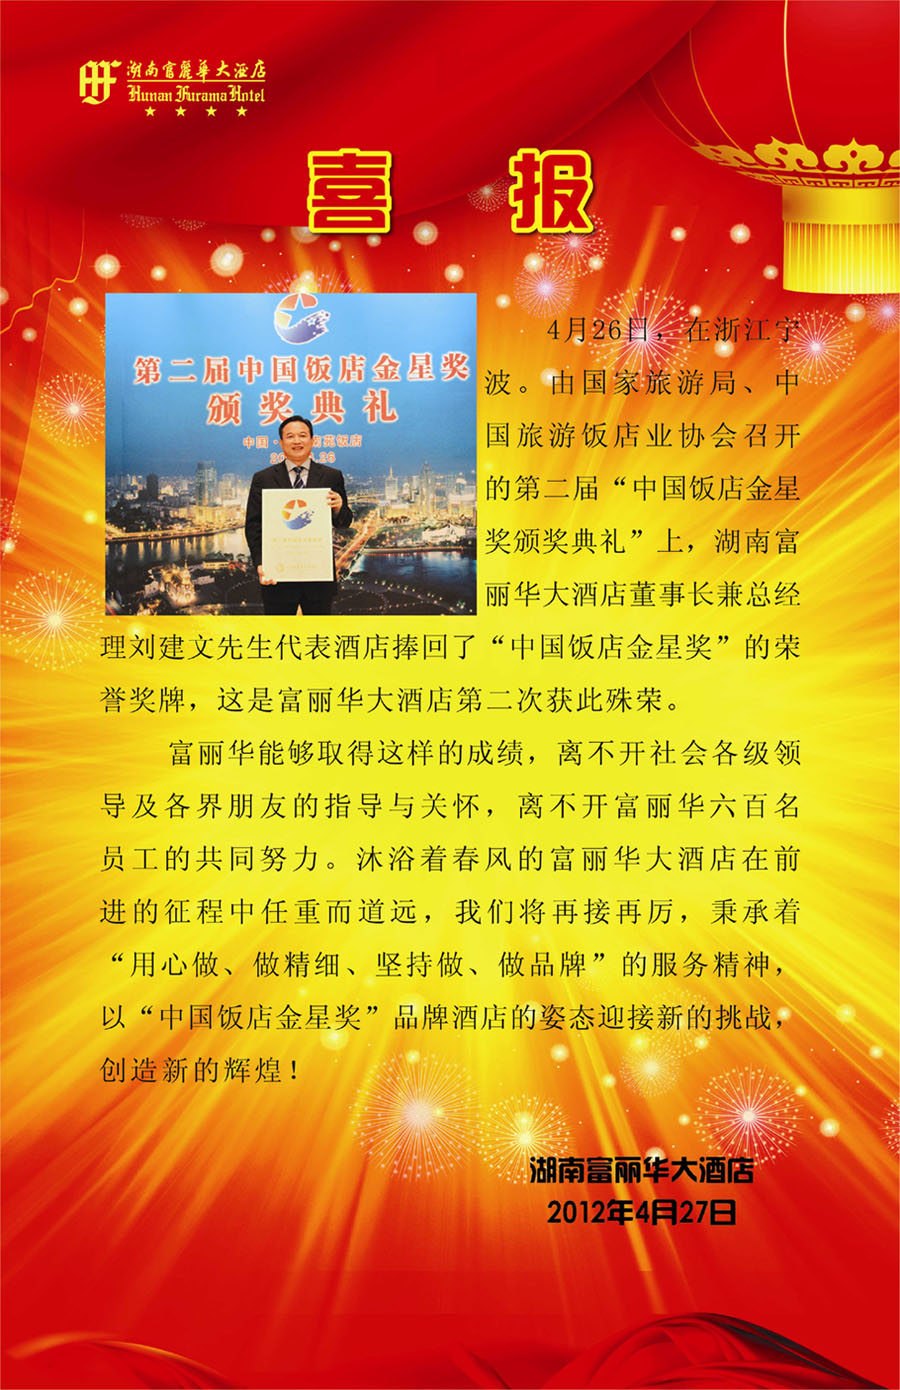 Hunan Furama Hotel was reelected the first 